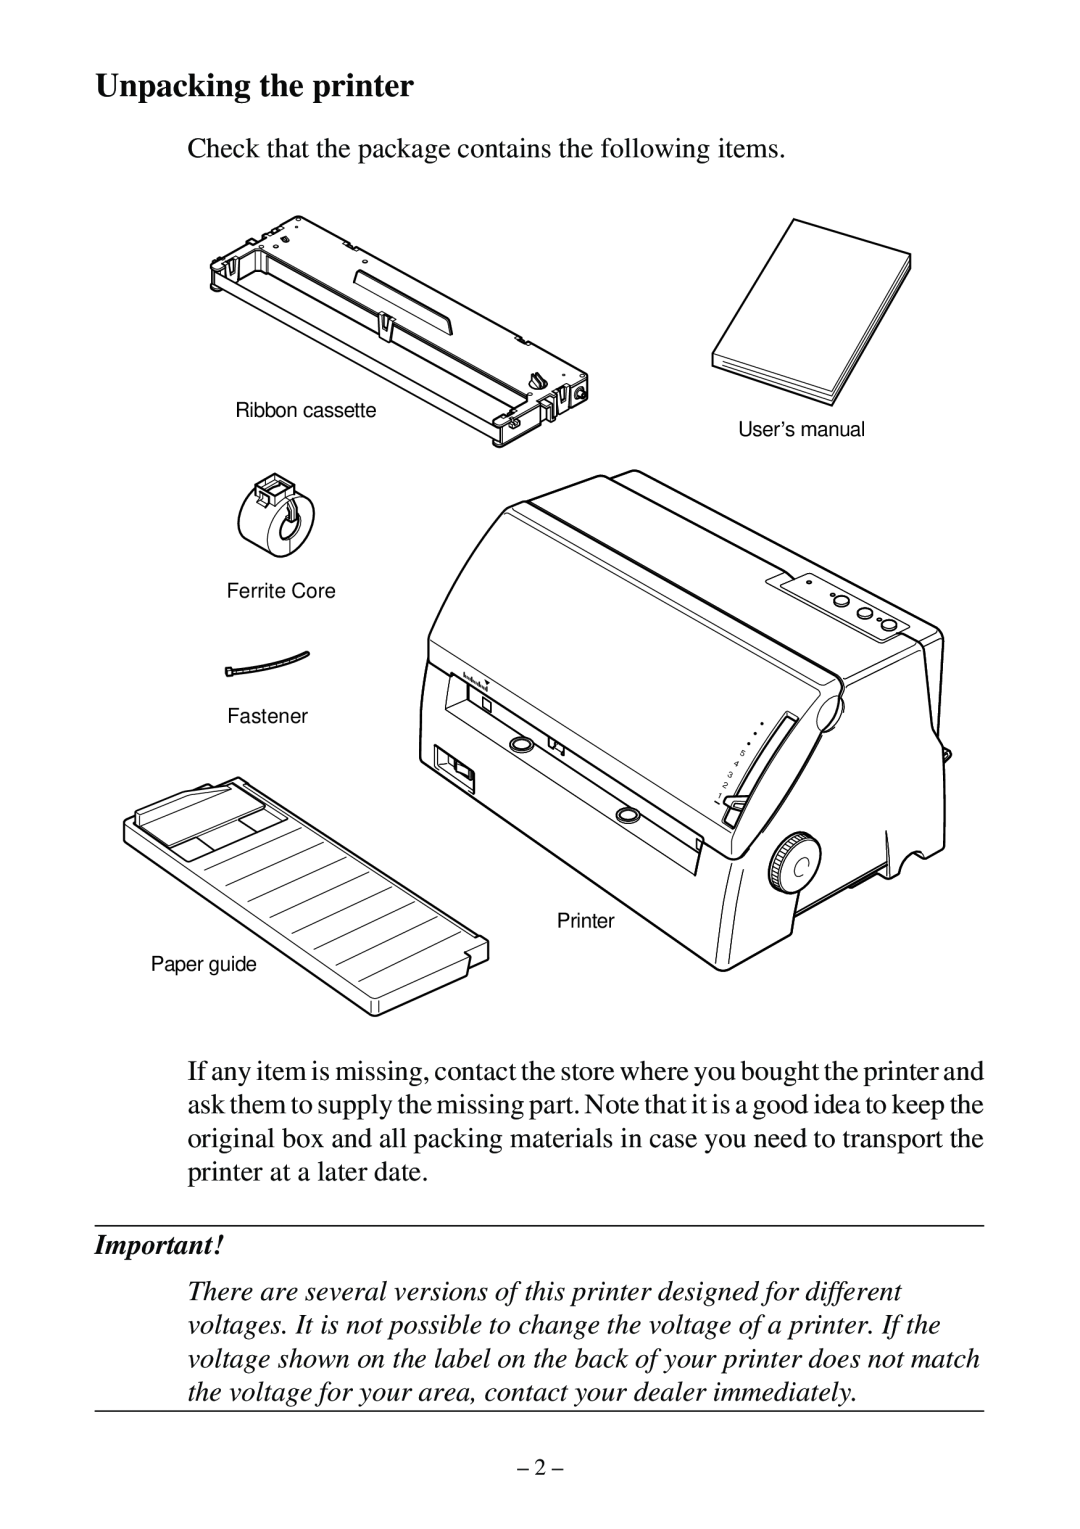 Star Micronics LC-500 user manual Unpacking the printer 